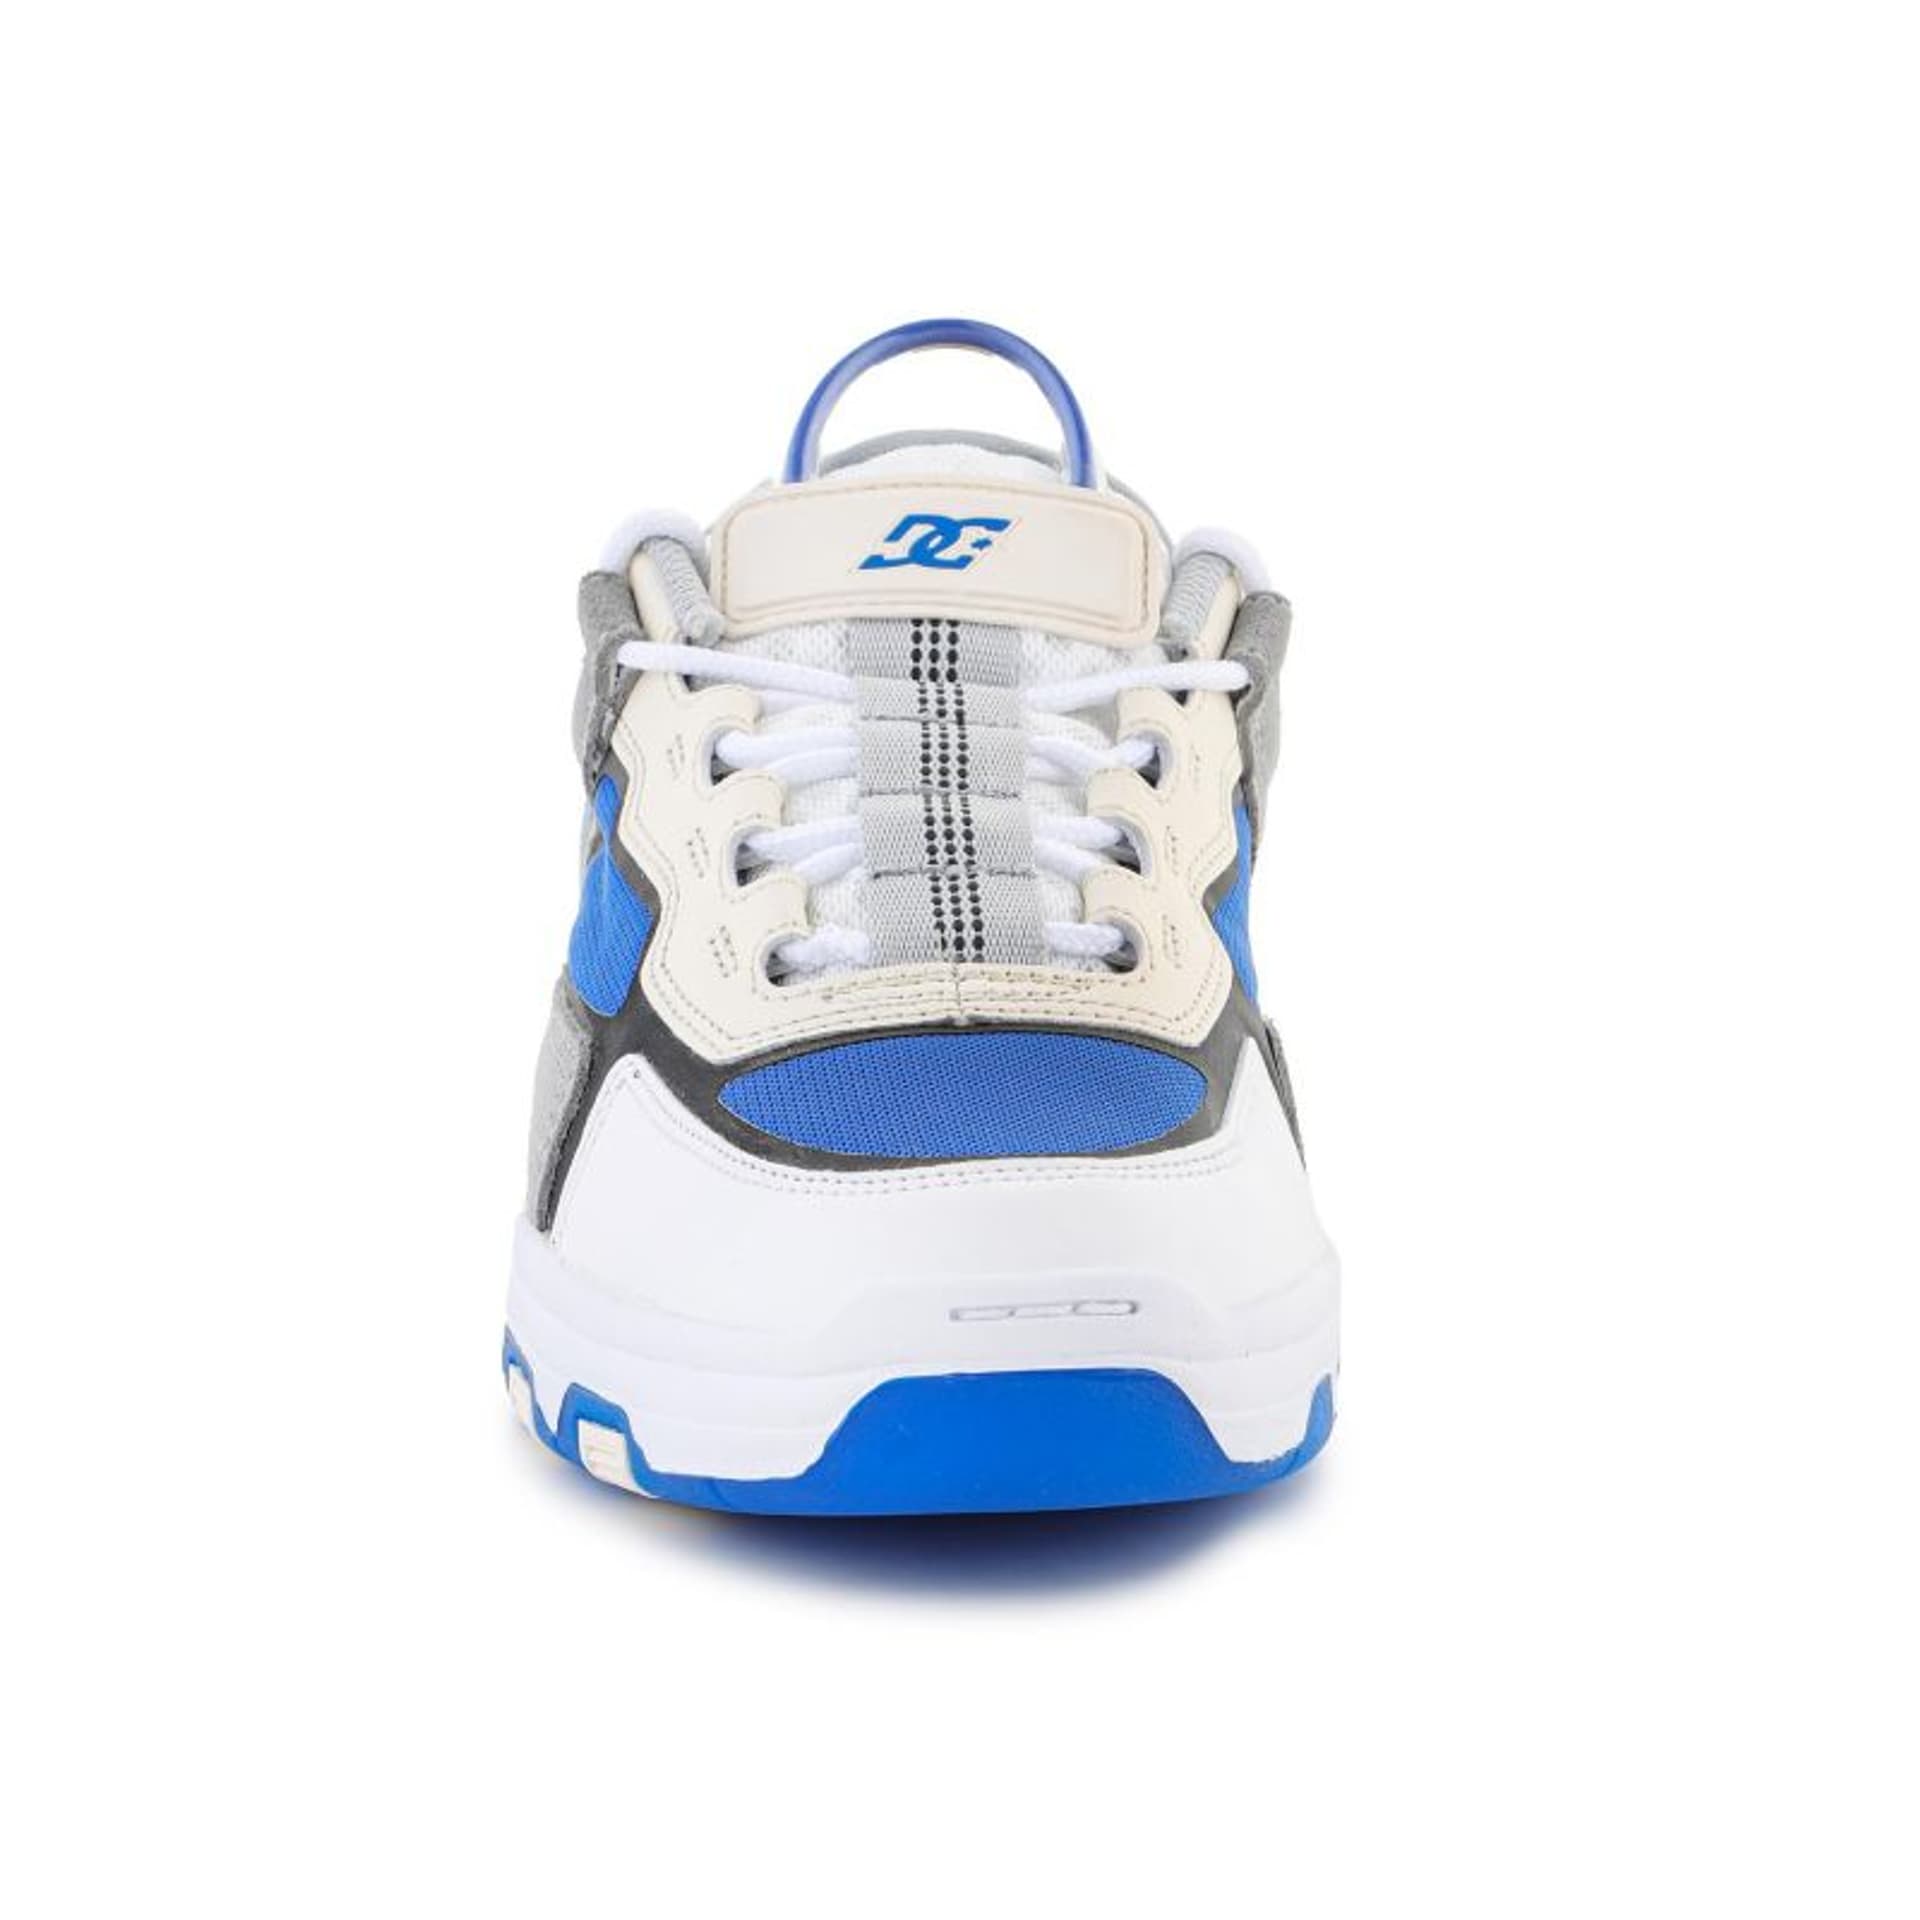 Buty DC Shoes Shanahan Metric Skate Shoes M (kolor Biały. Niebieski. Szary/Srebrny, rozmiar EU 43)